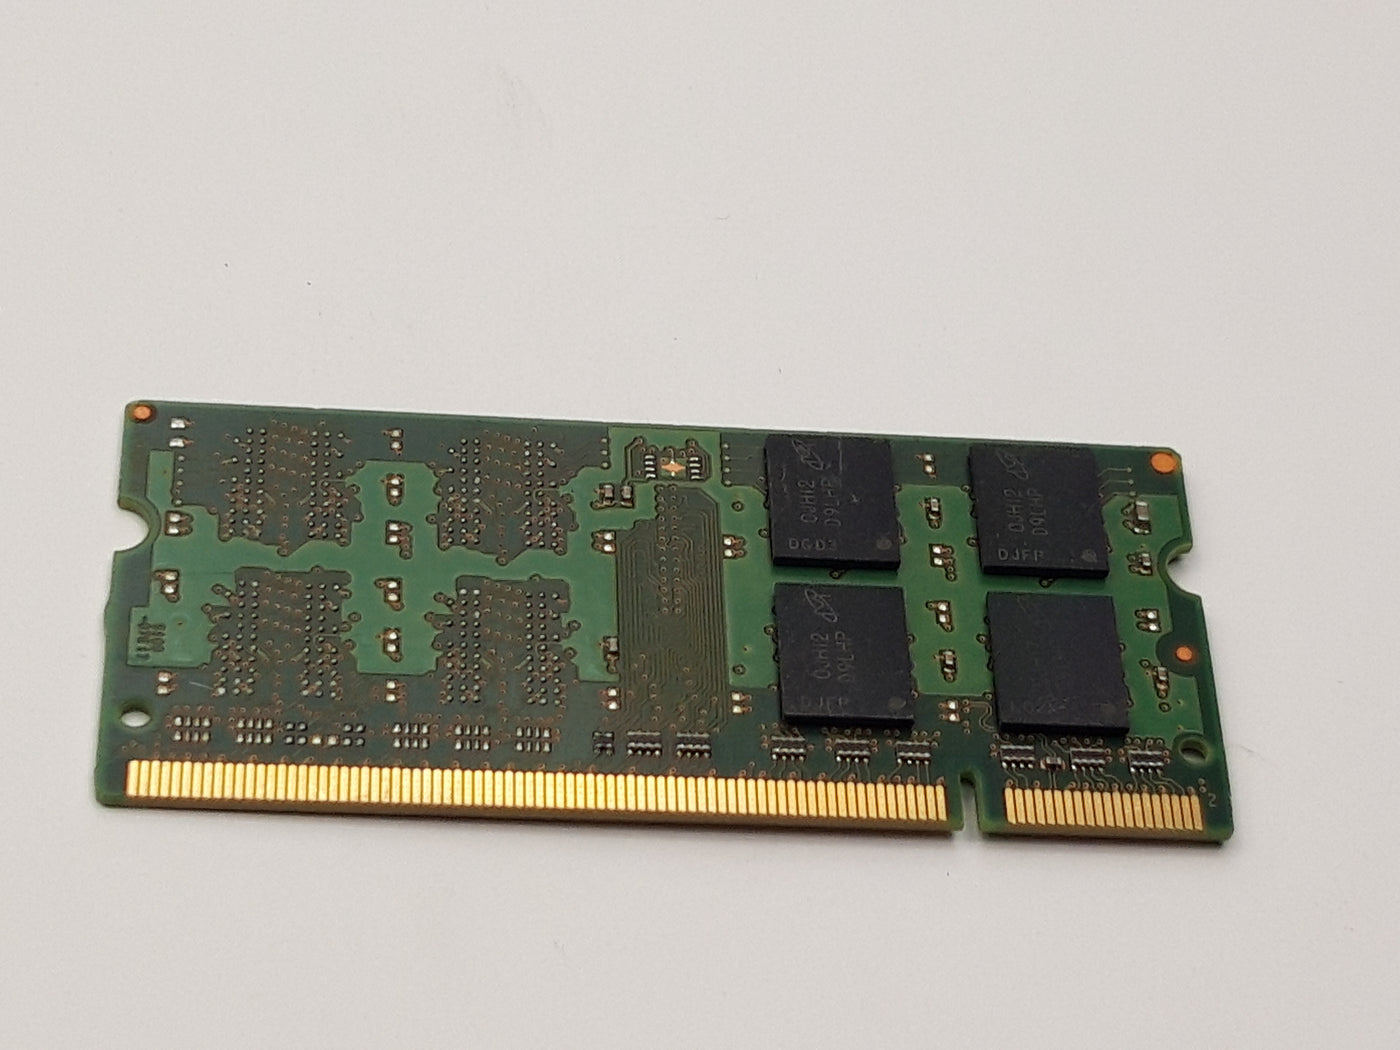 Micron 1GB 2Rx8 PC2-5300s SODIMM (MT8TF25632HZ-667H1 Ref )